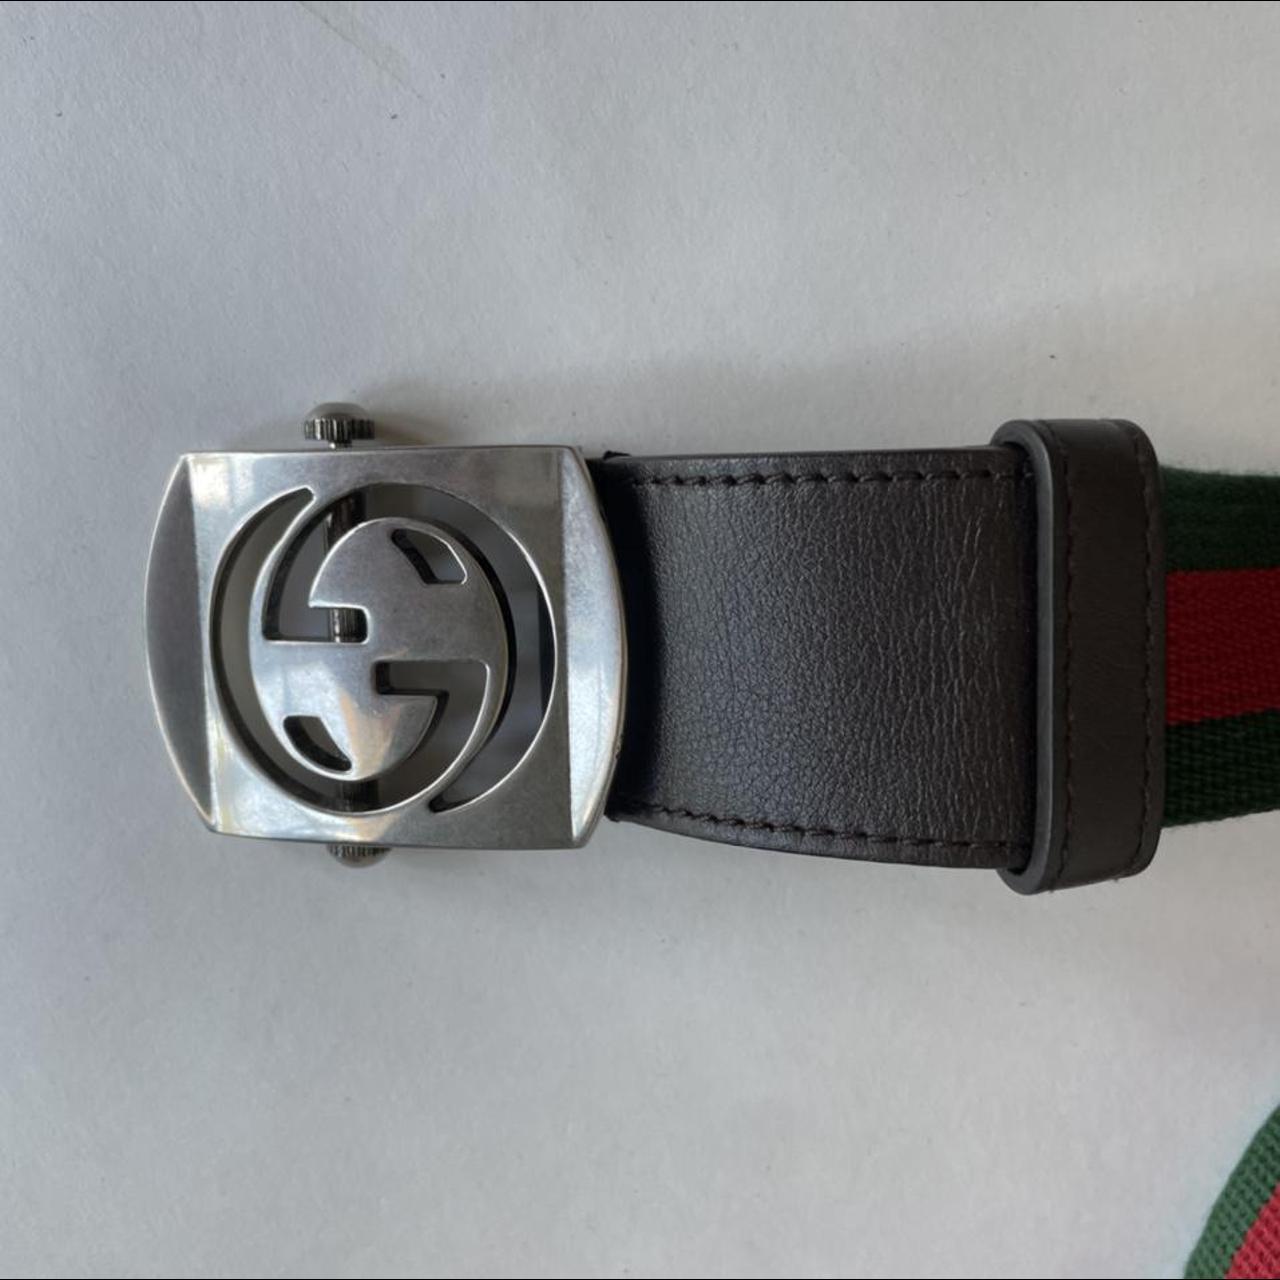 Authentic Gucci Striped Belt. Condition 9.5/10 due... - Depop